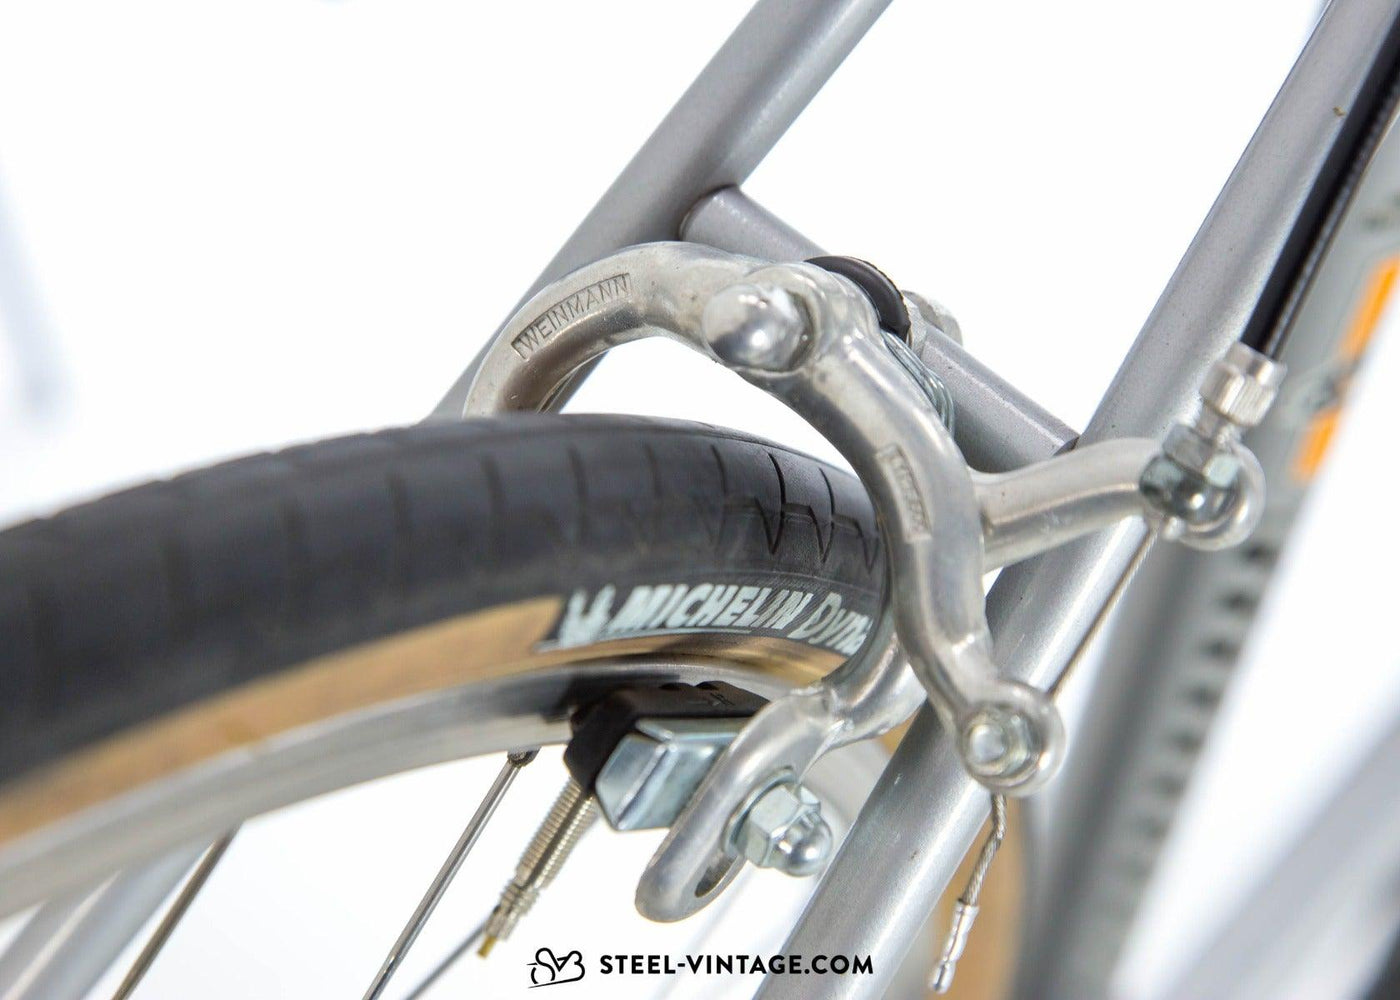 Peugeot Course Classic Road Bike - Steel Vintage Bikes